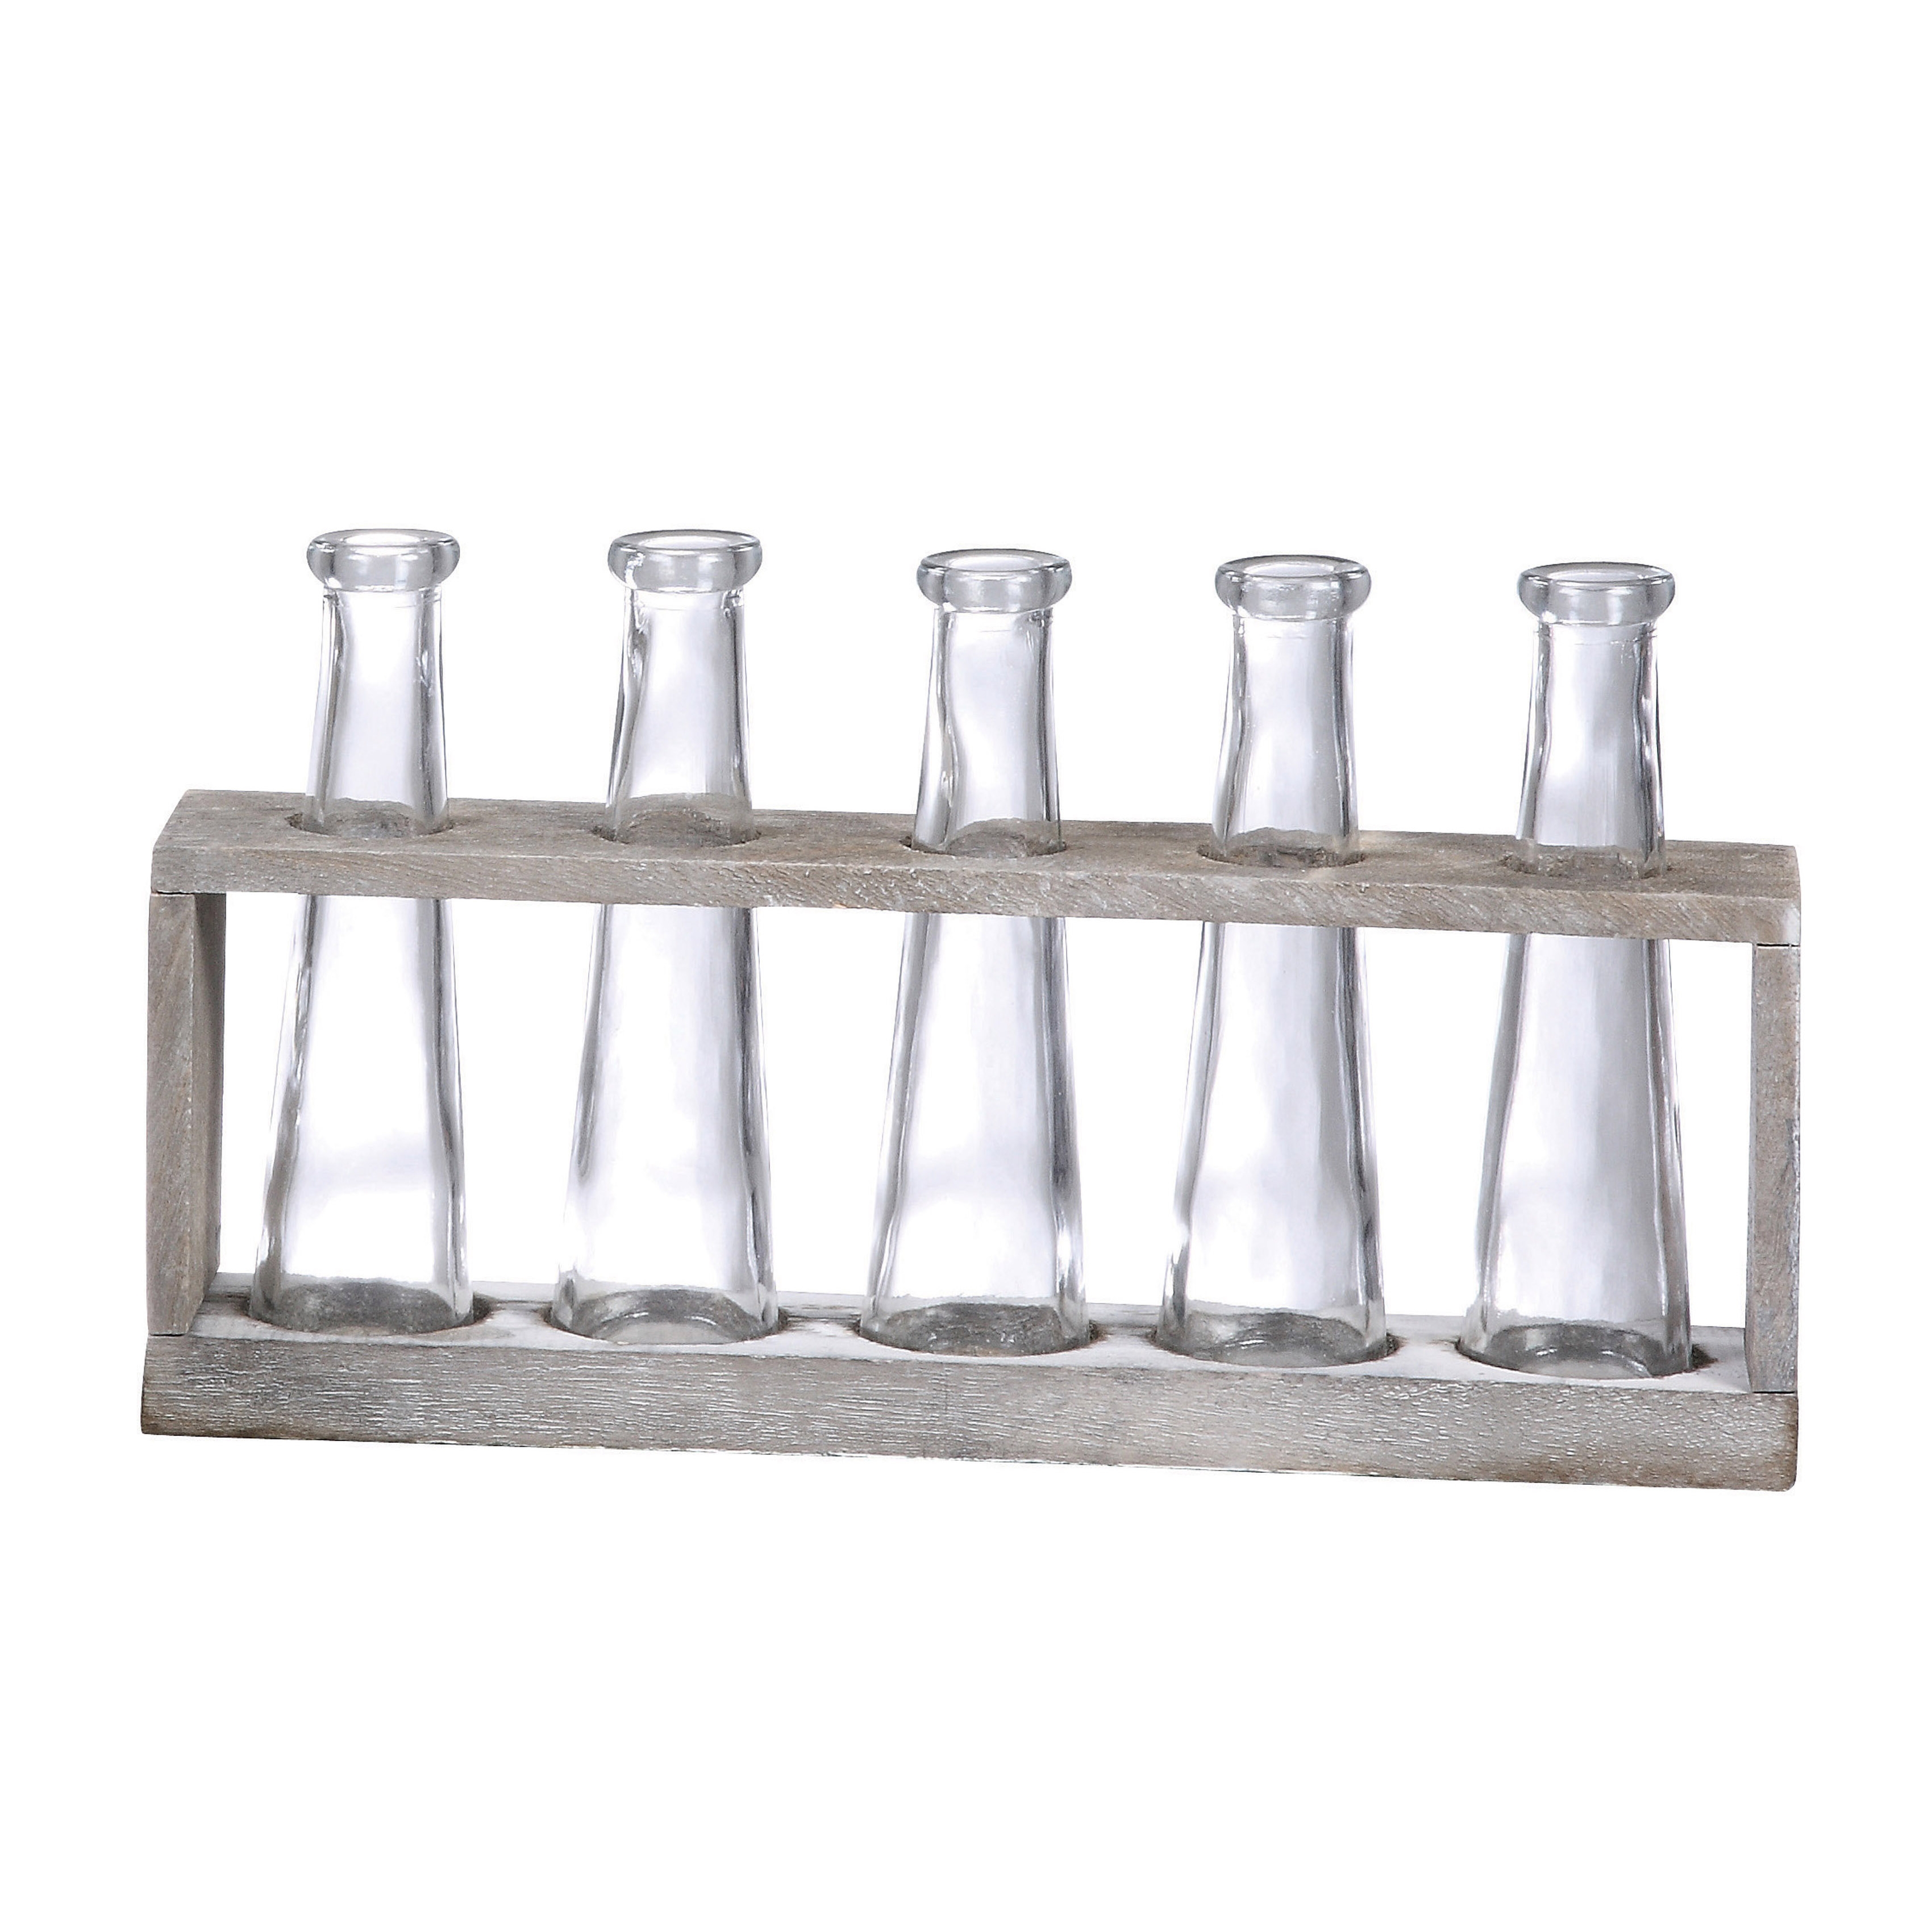 Distressed Grey Wood Vase Holder with 5 Glass Vases - Image 0